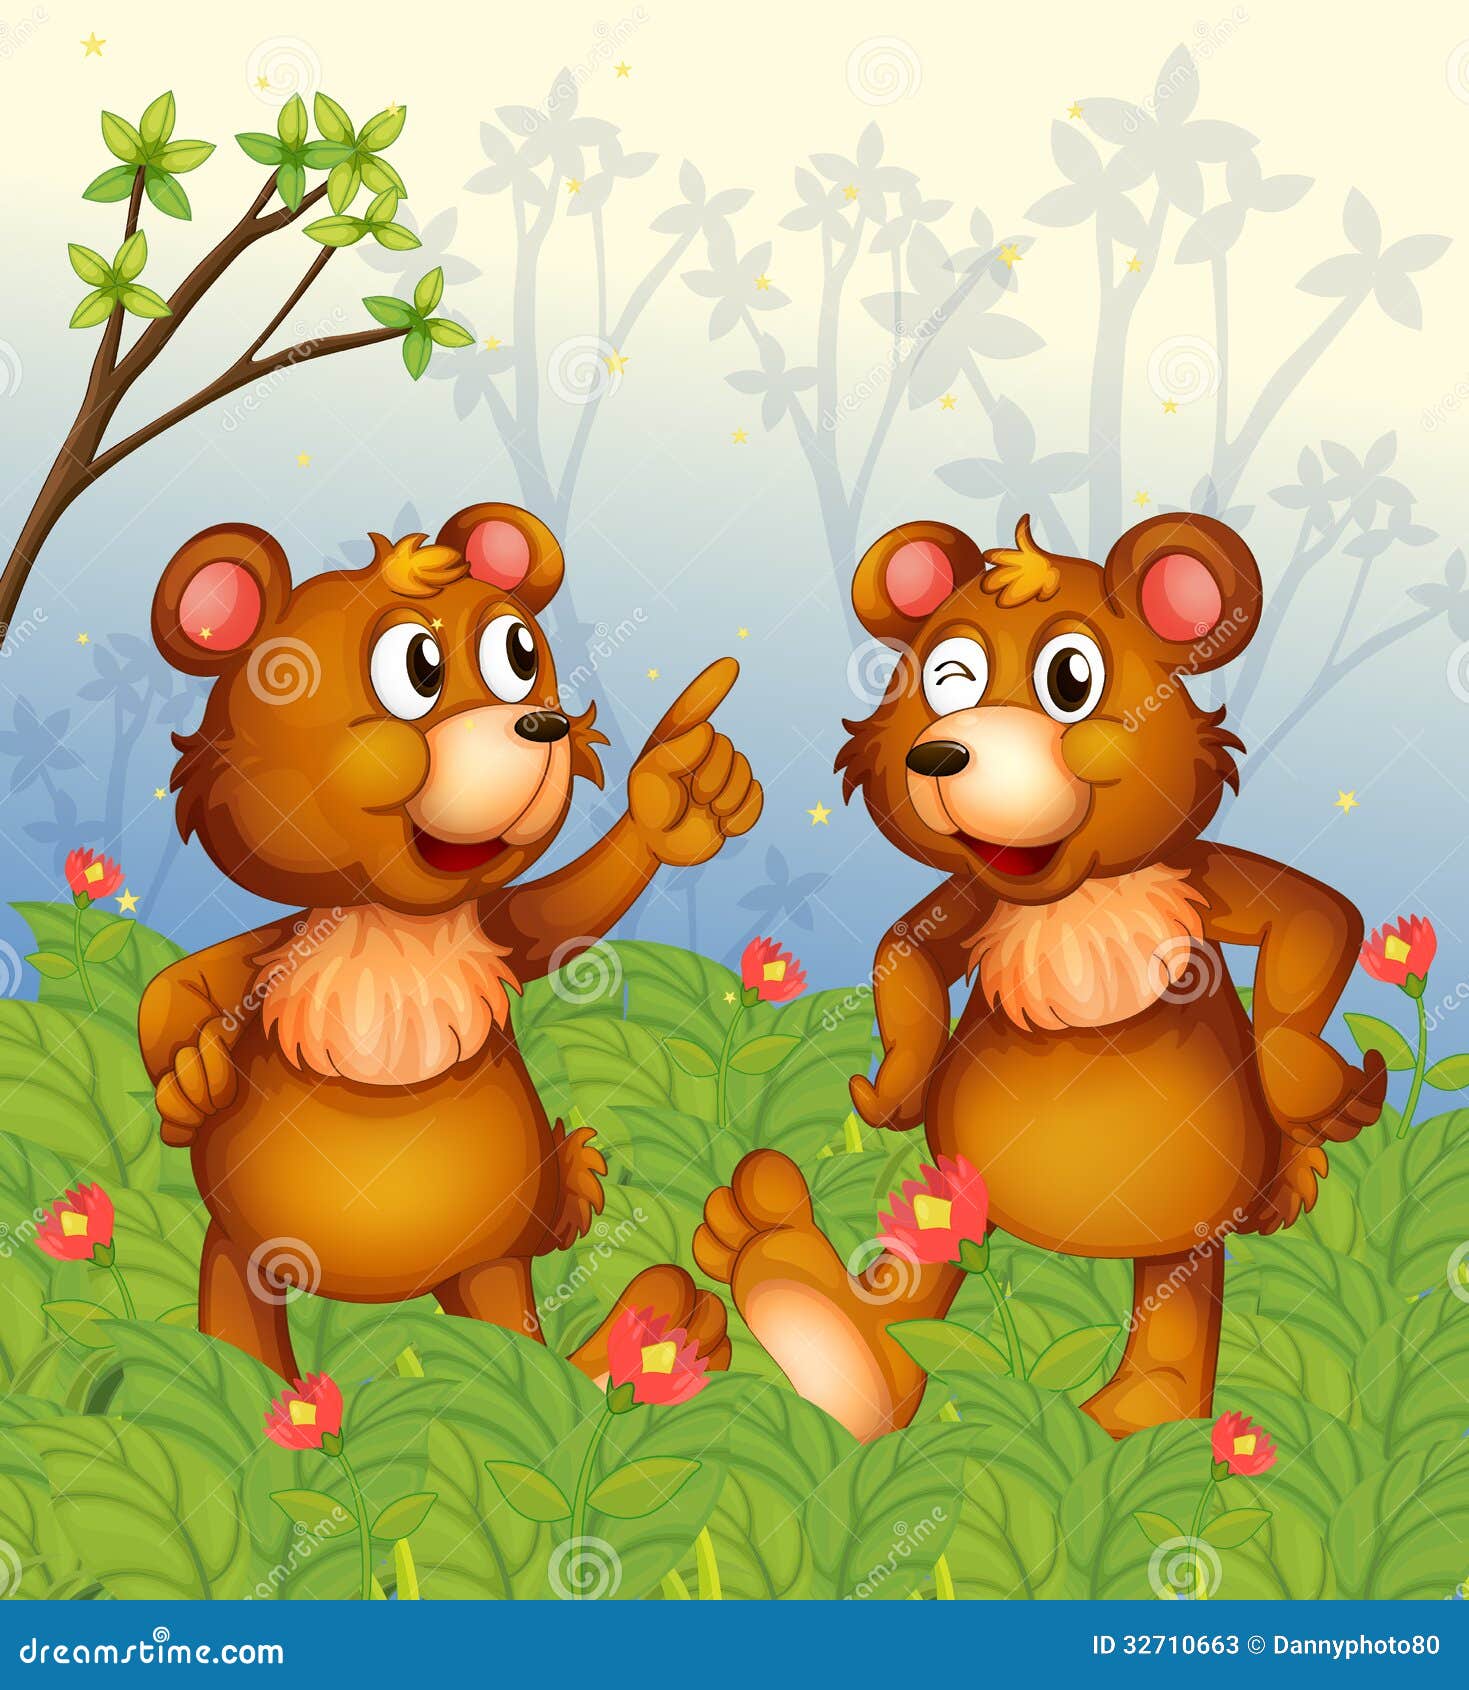 Two bears in the garden stock vector. Illustration of legs - 32710663